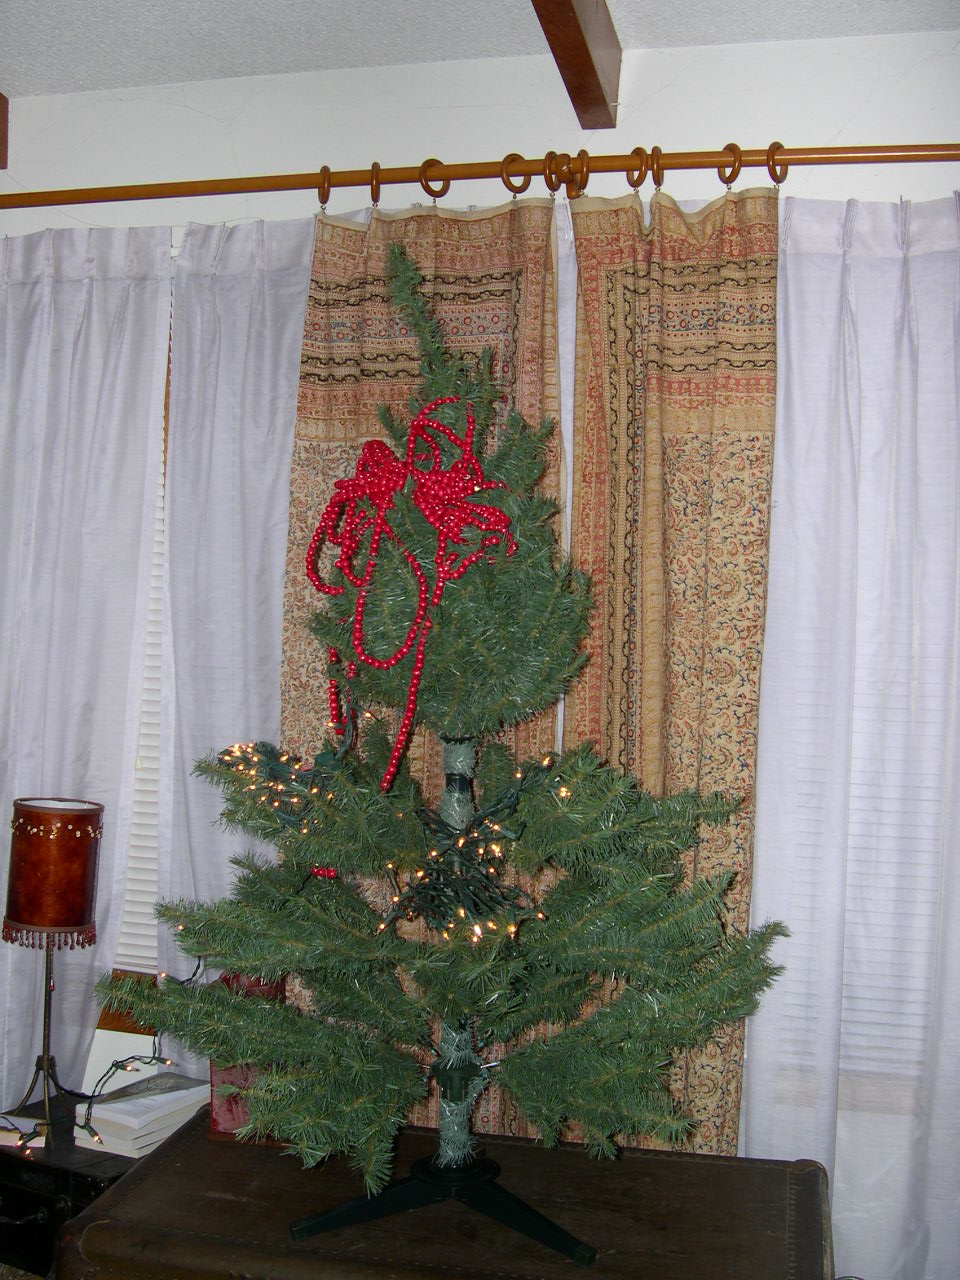 [dennis'+tree+decorations.jpg]